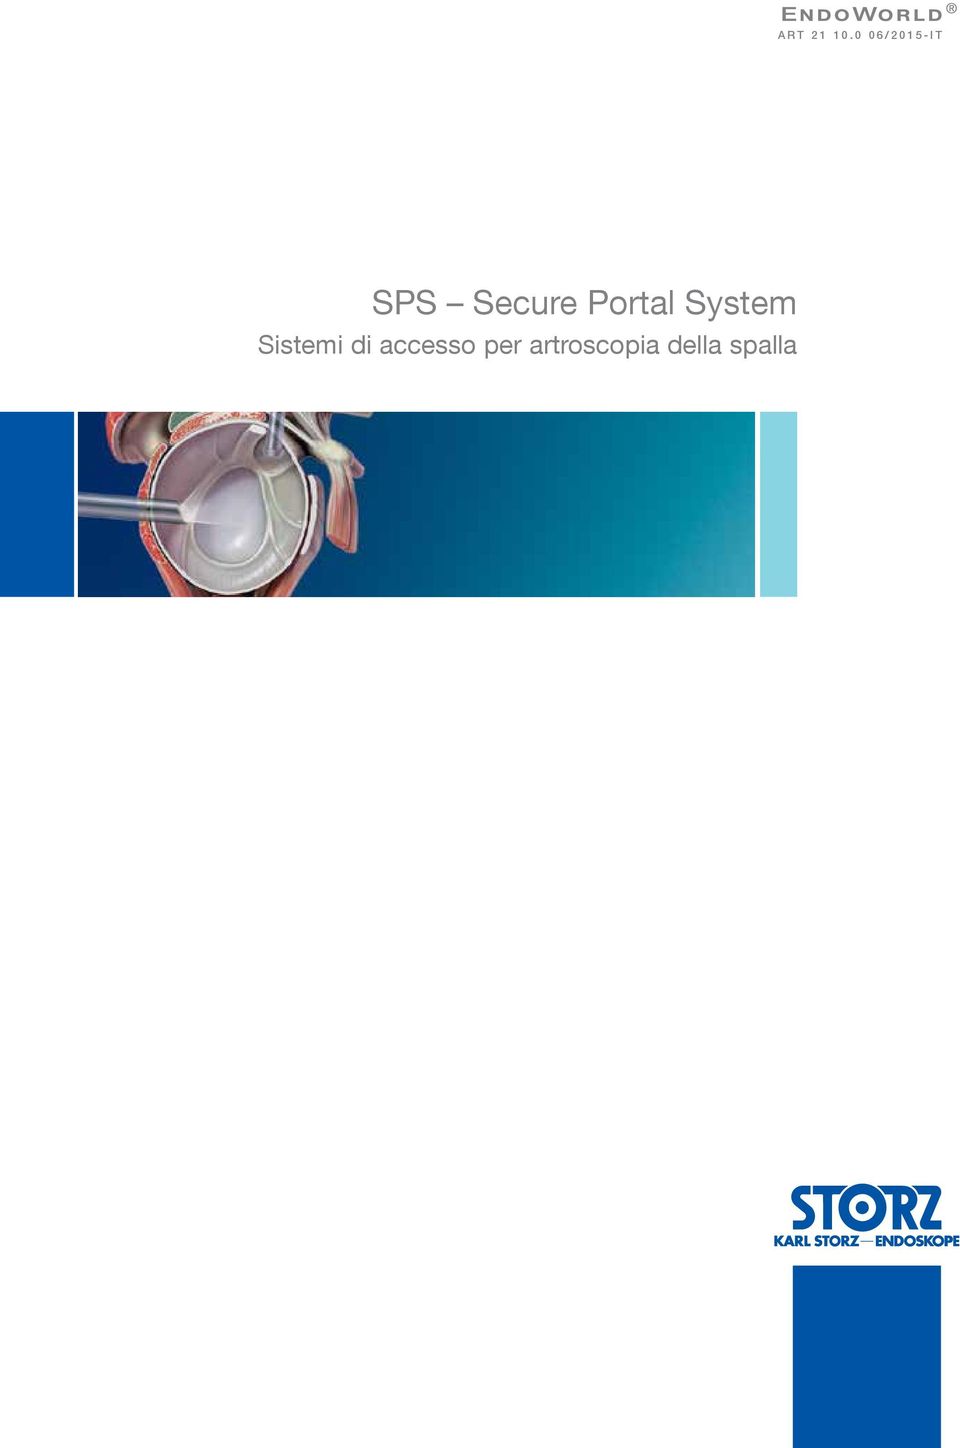 Portal System Sistemi